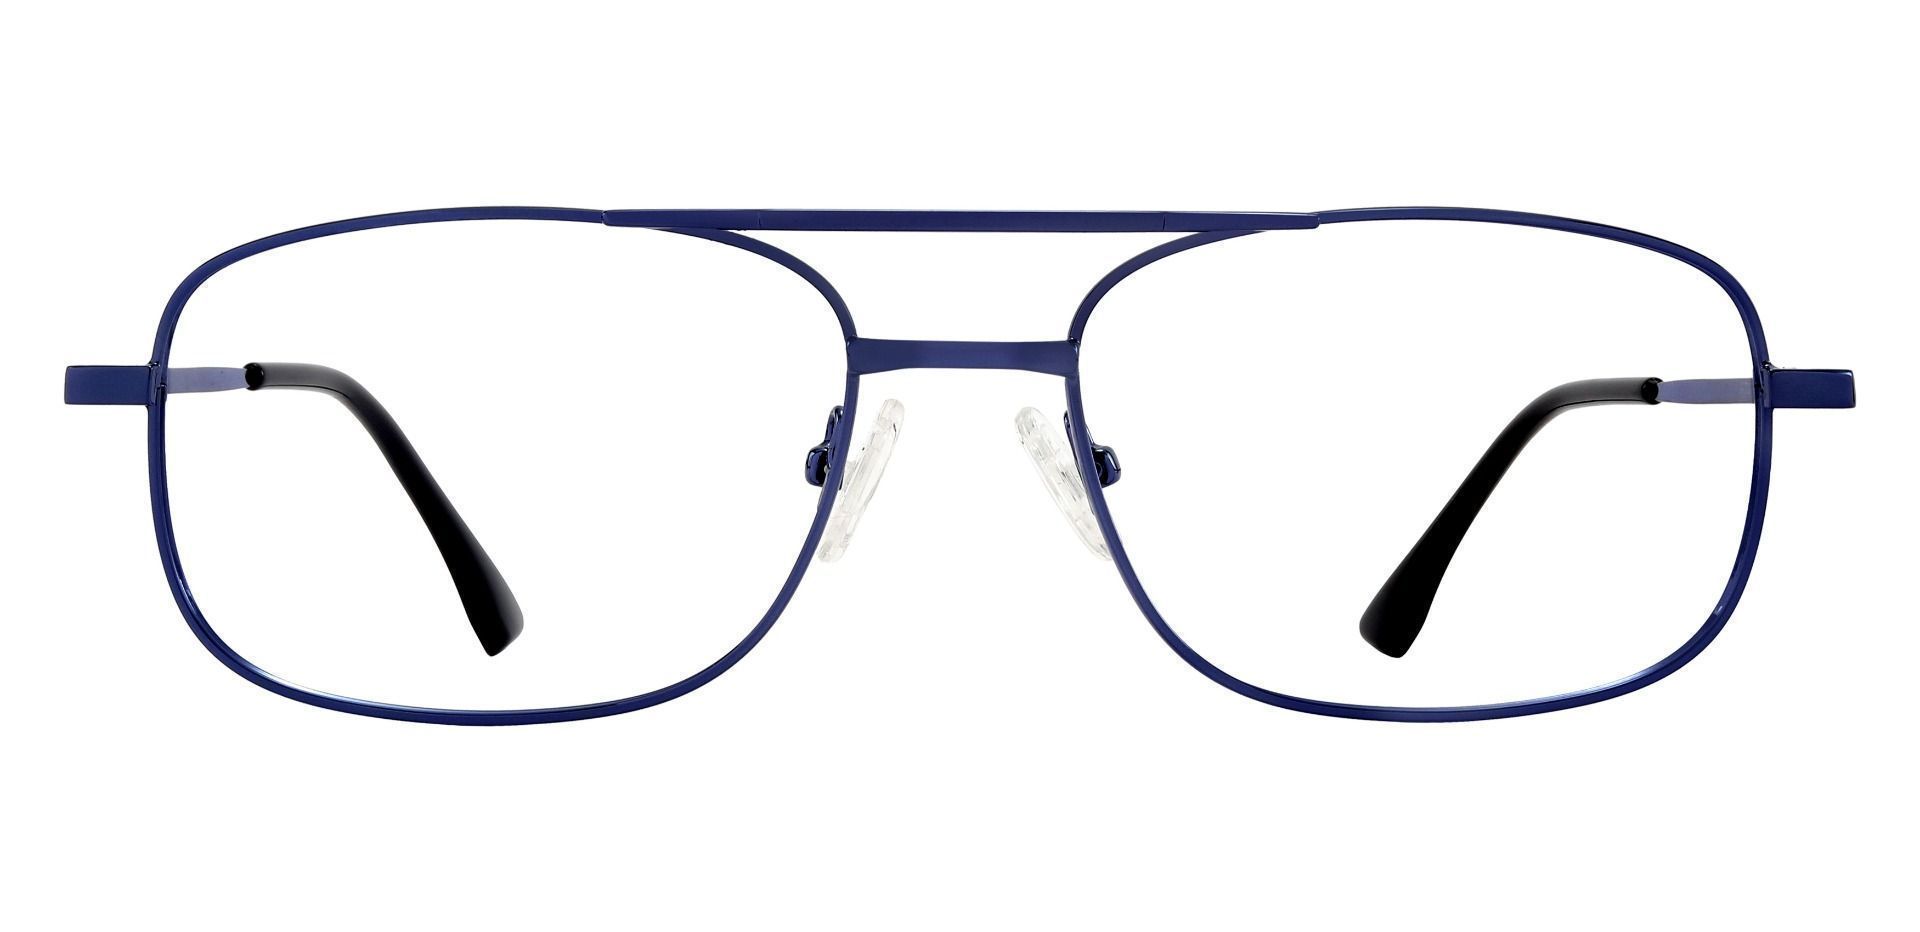 Manning Aviator Prescription Glasses - Blue